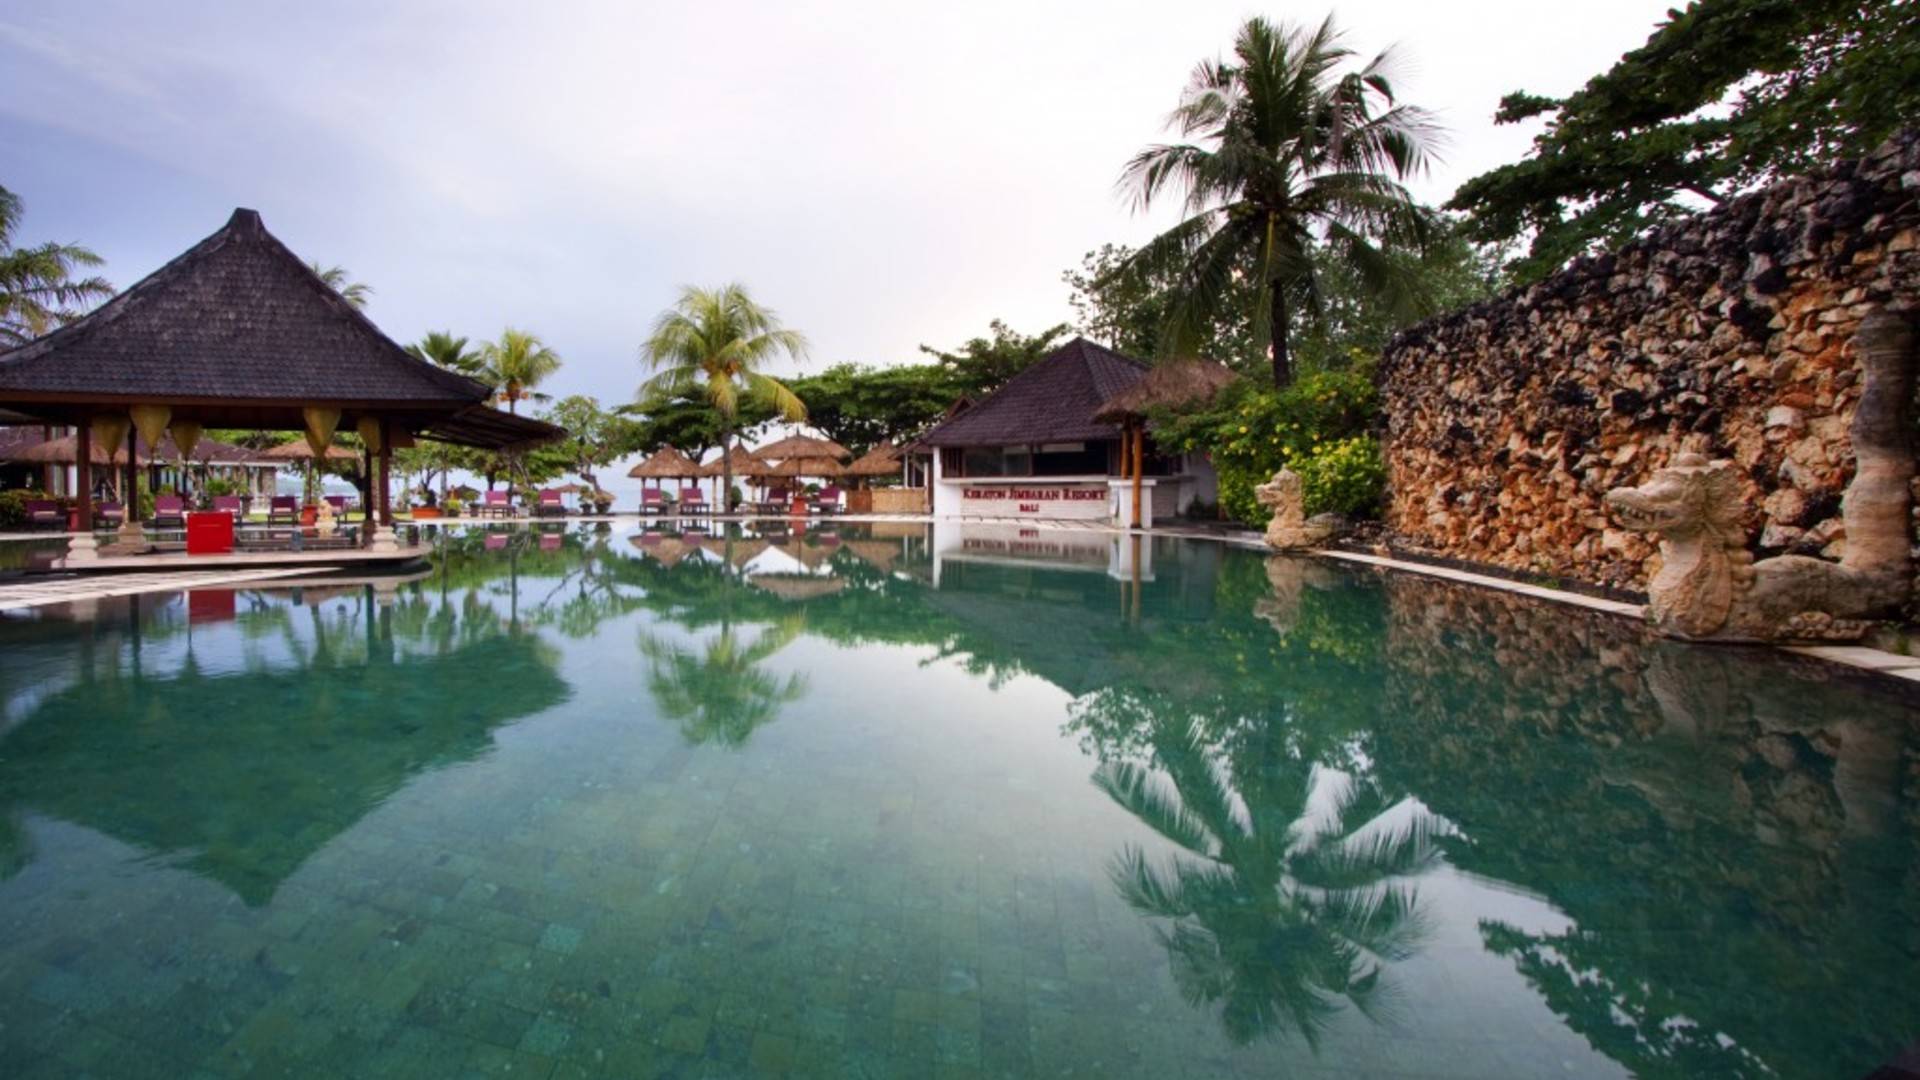 Keraton jimbaran resort 4* - индонезия, бали - отели | пегас туристик